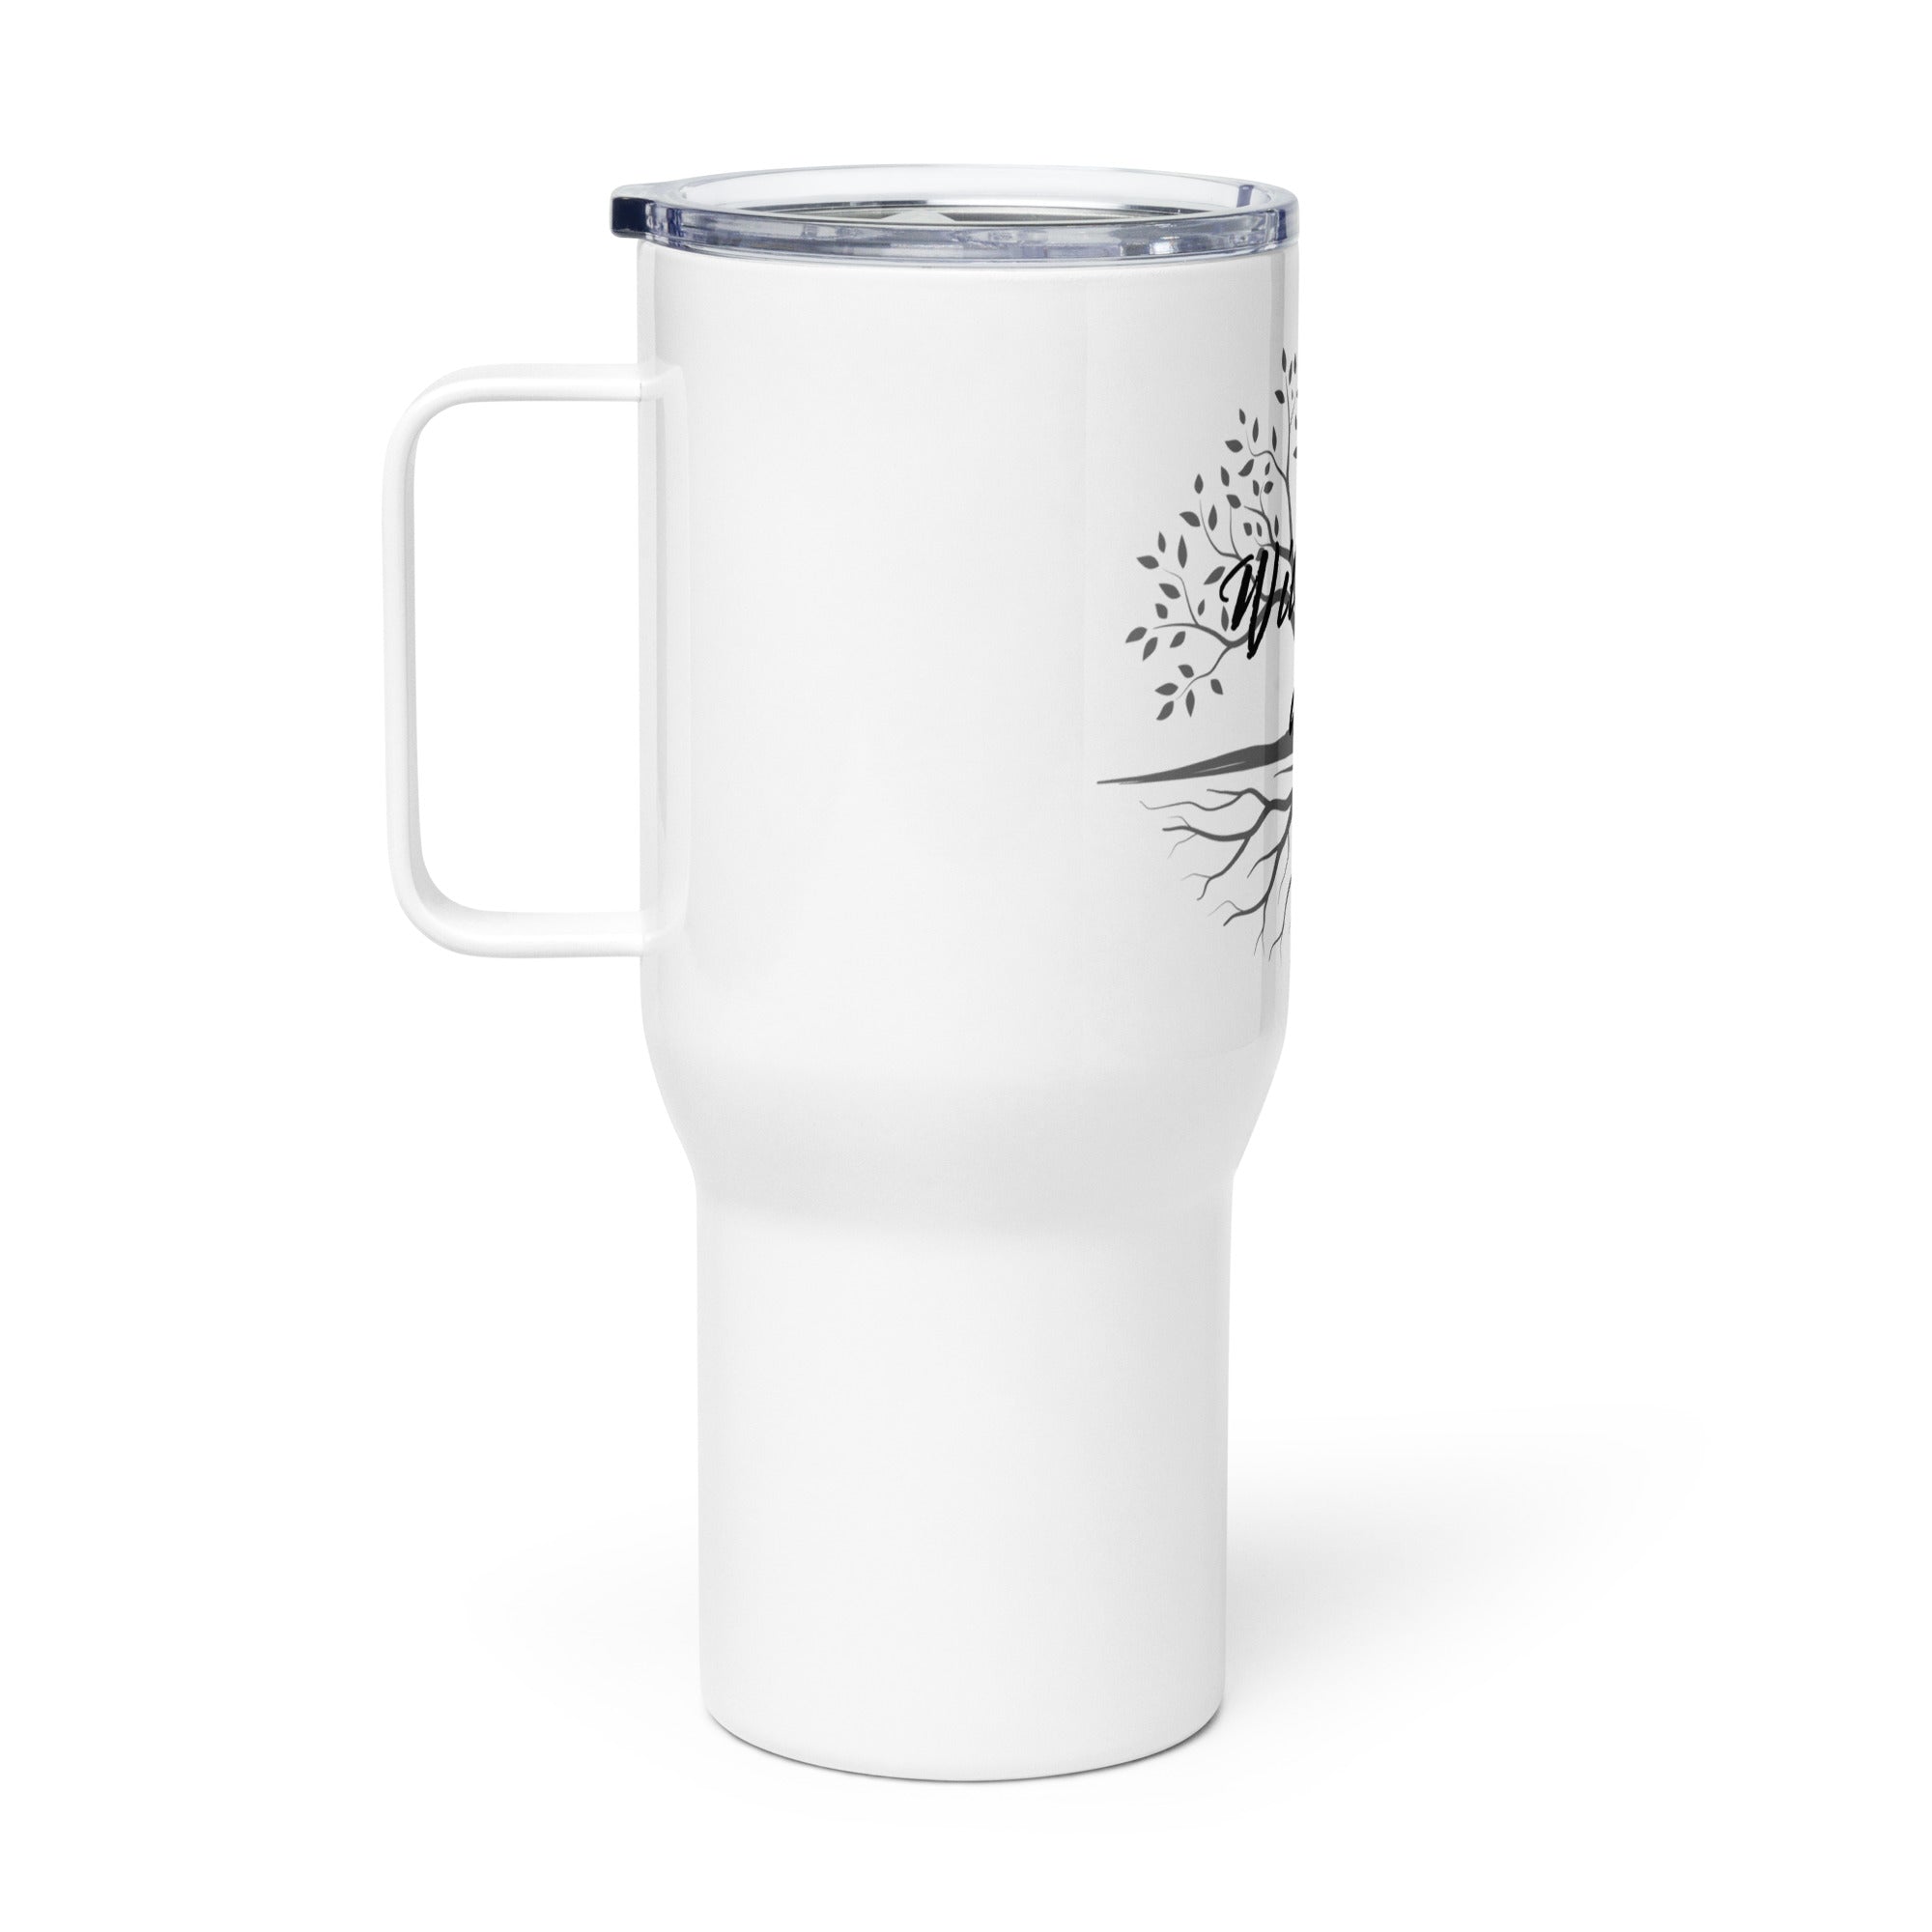 Wild N Tea Travel mug with a handle